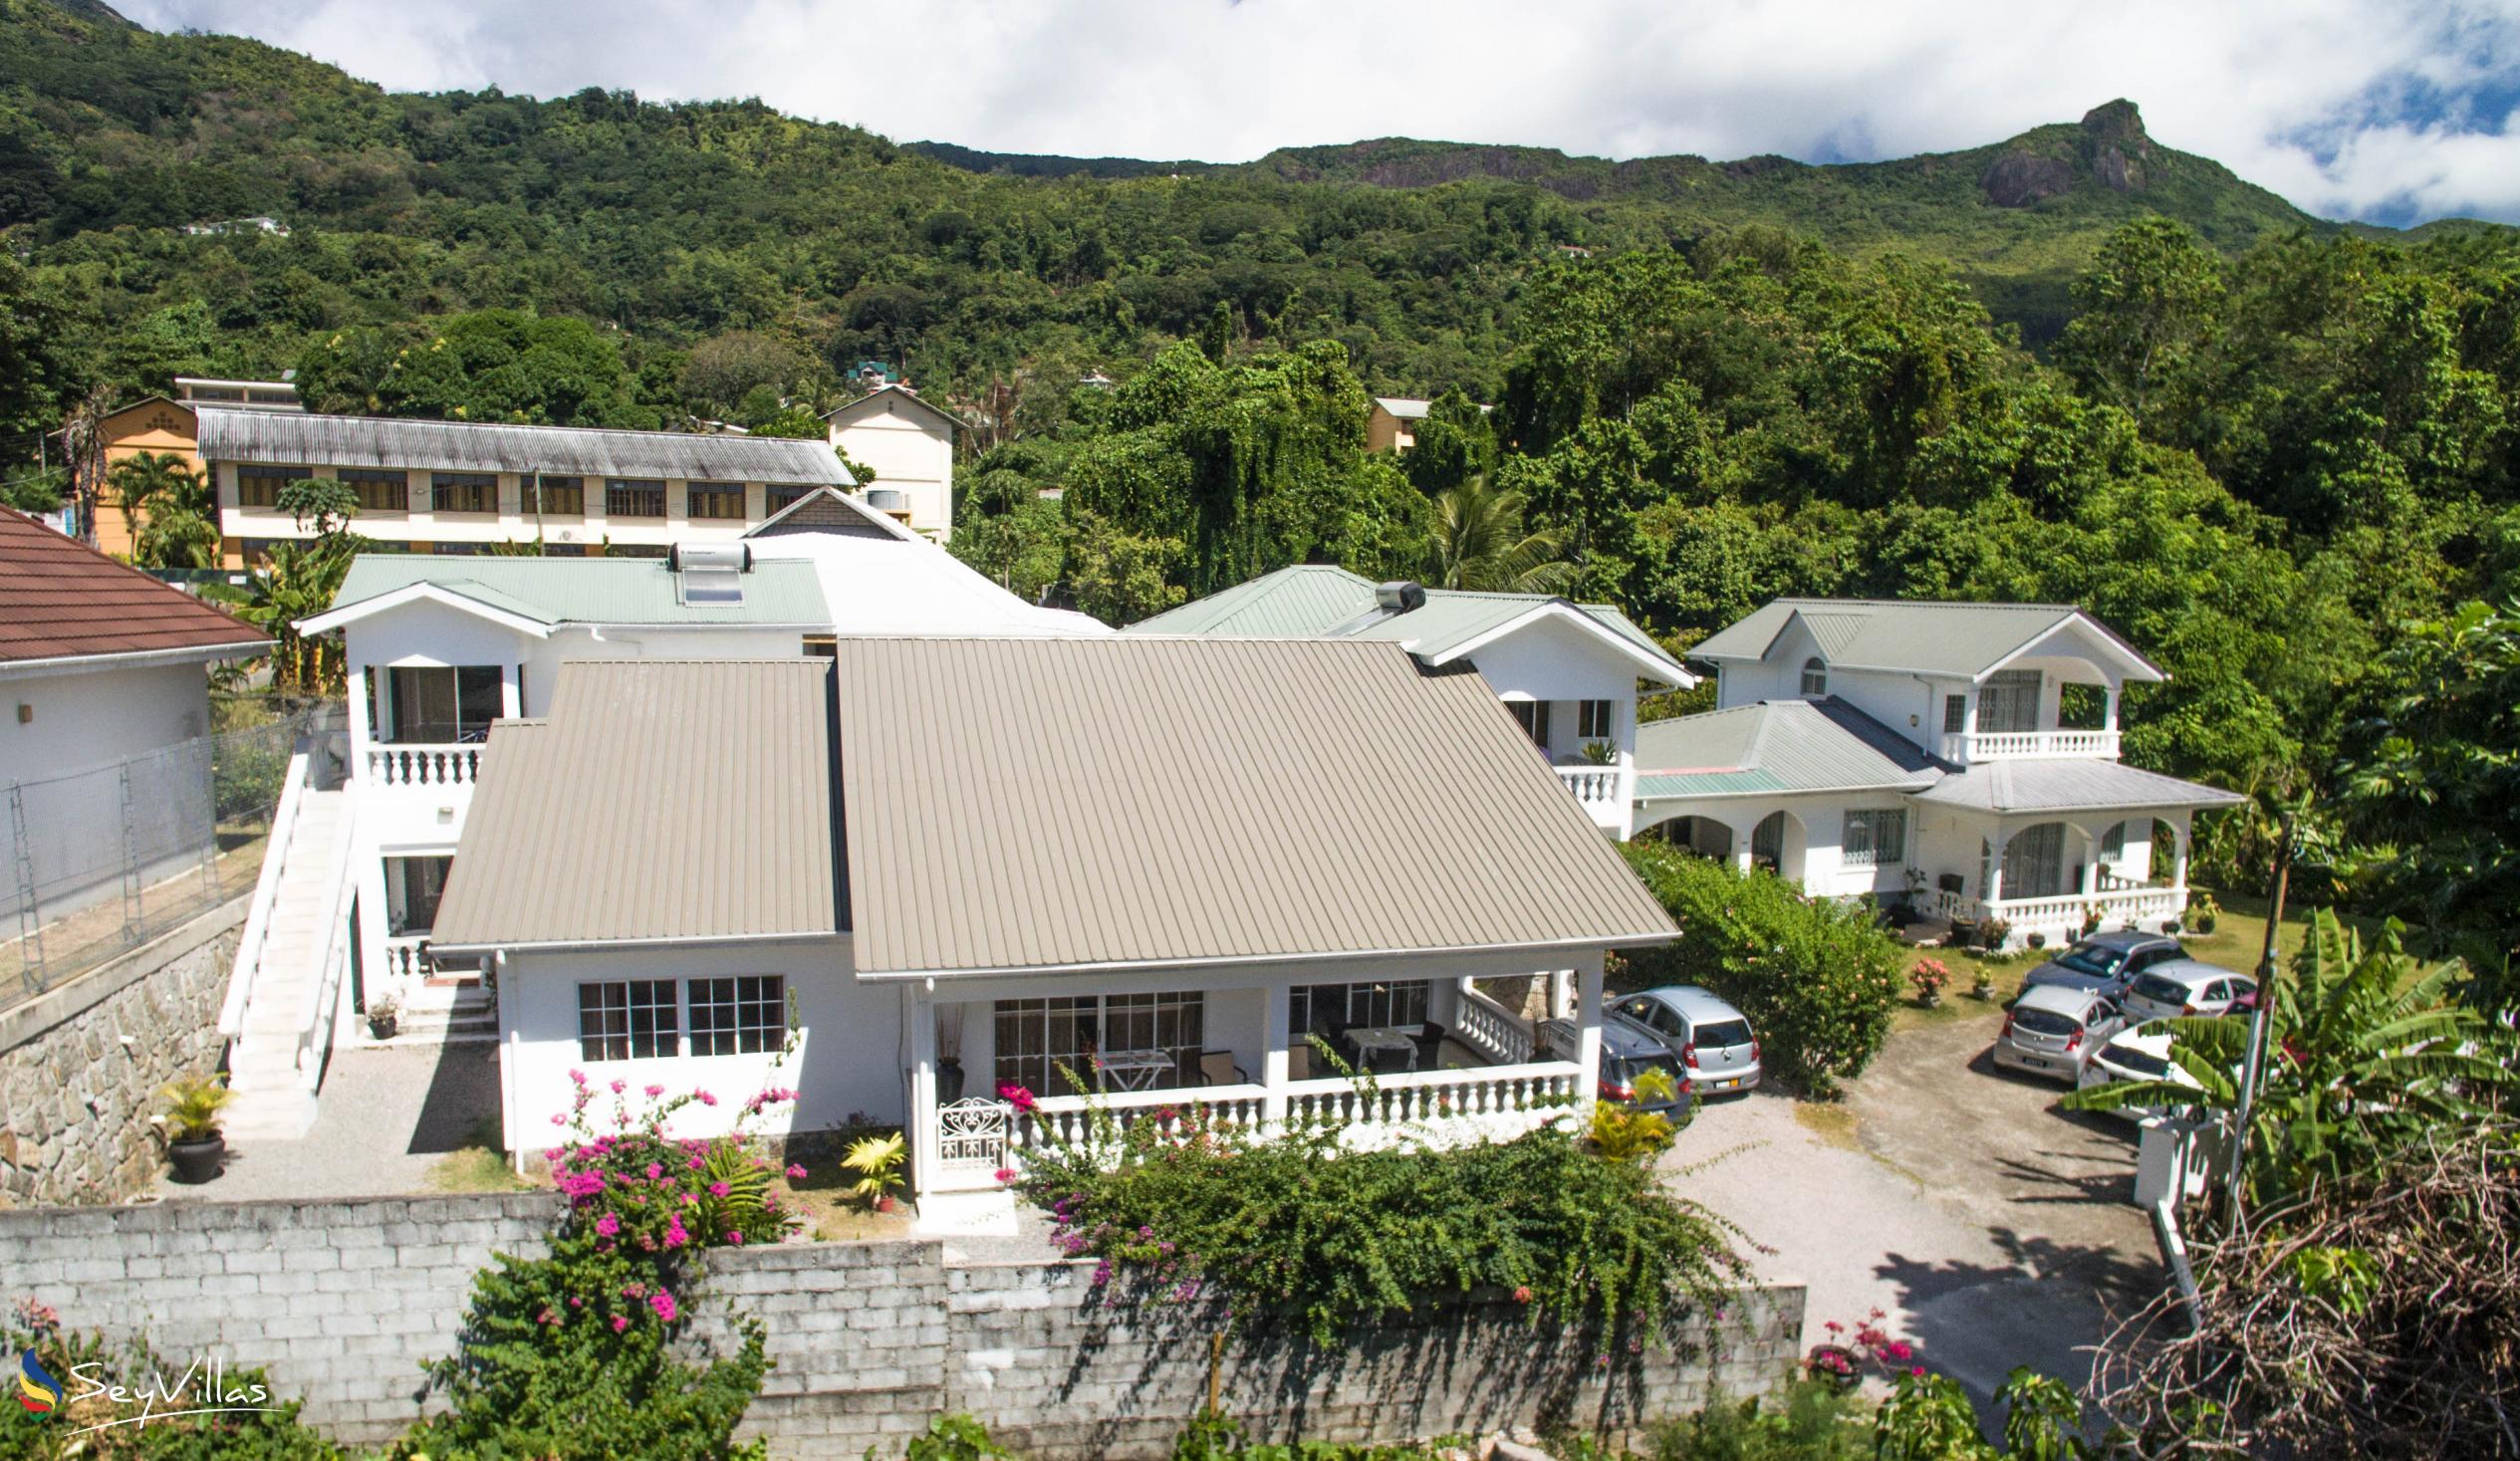 Photo 4: Row's Villa - Outdoor area - Mahé (Seychelles)